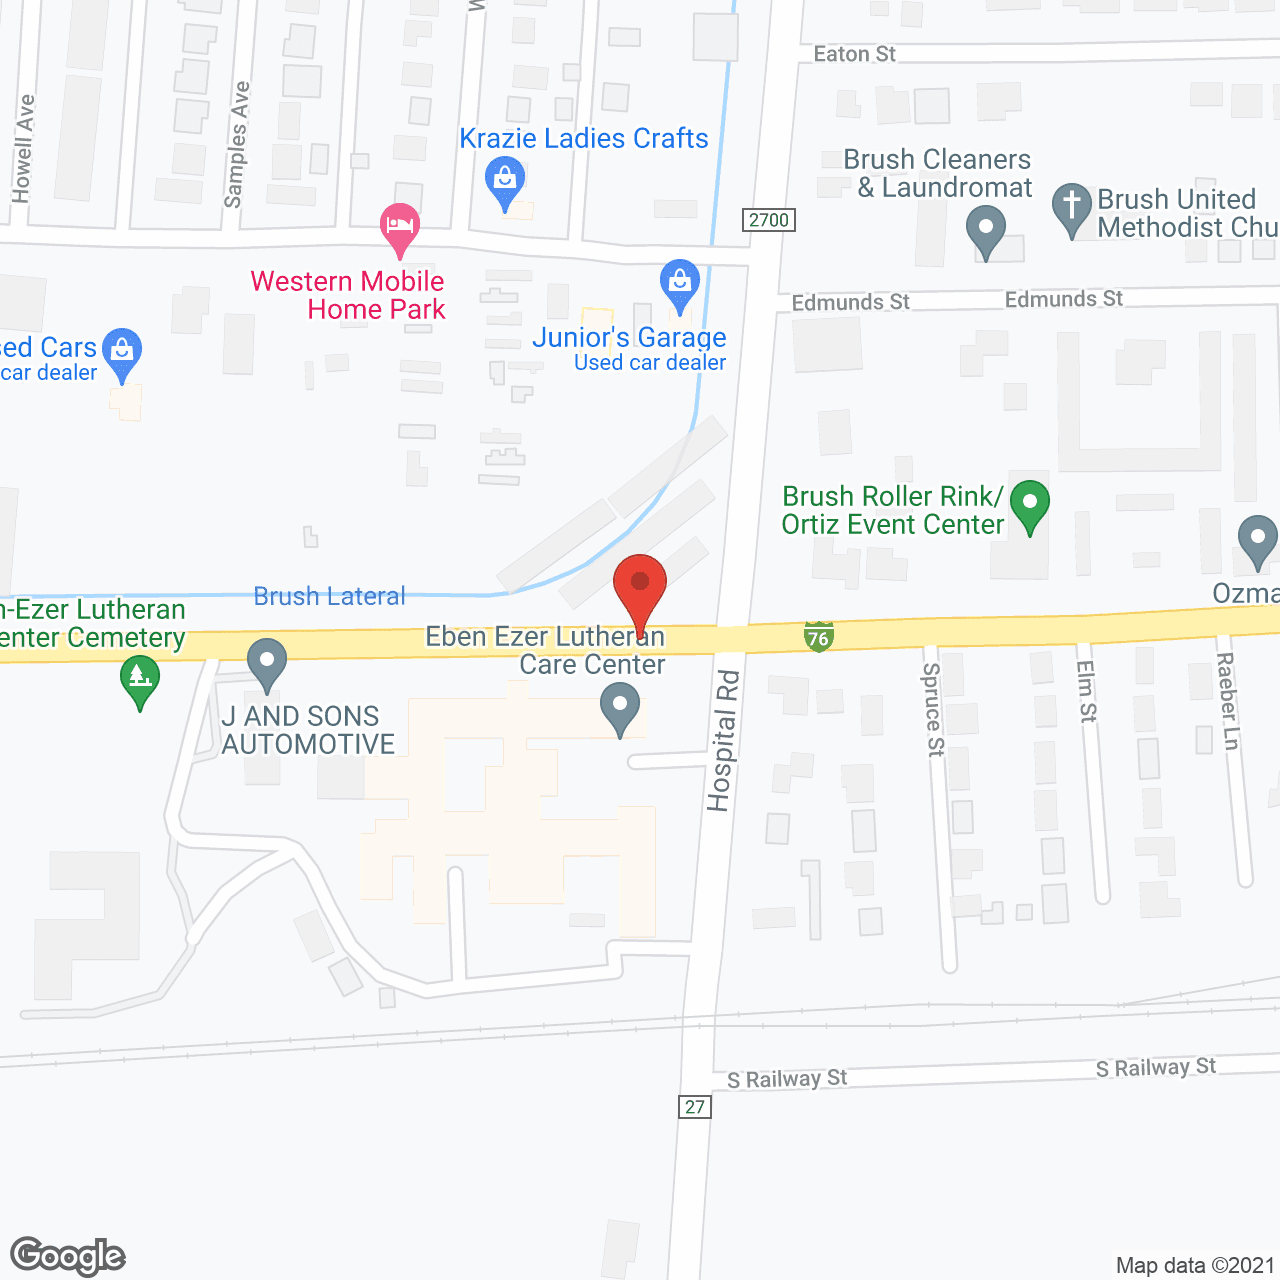 Eben Ezer Lutheran Care Center in google map